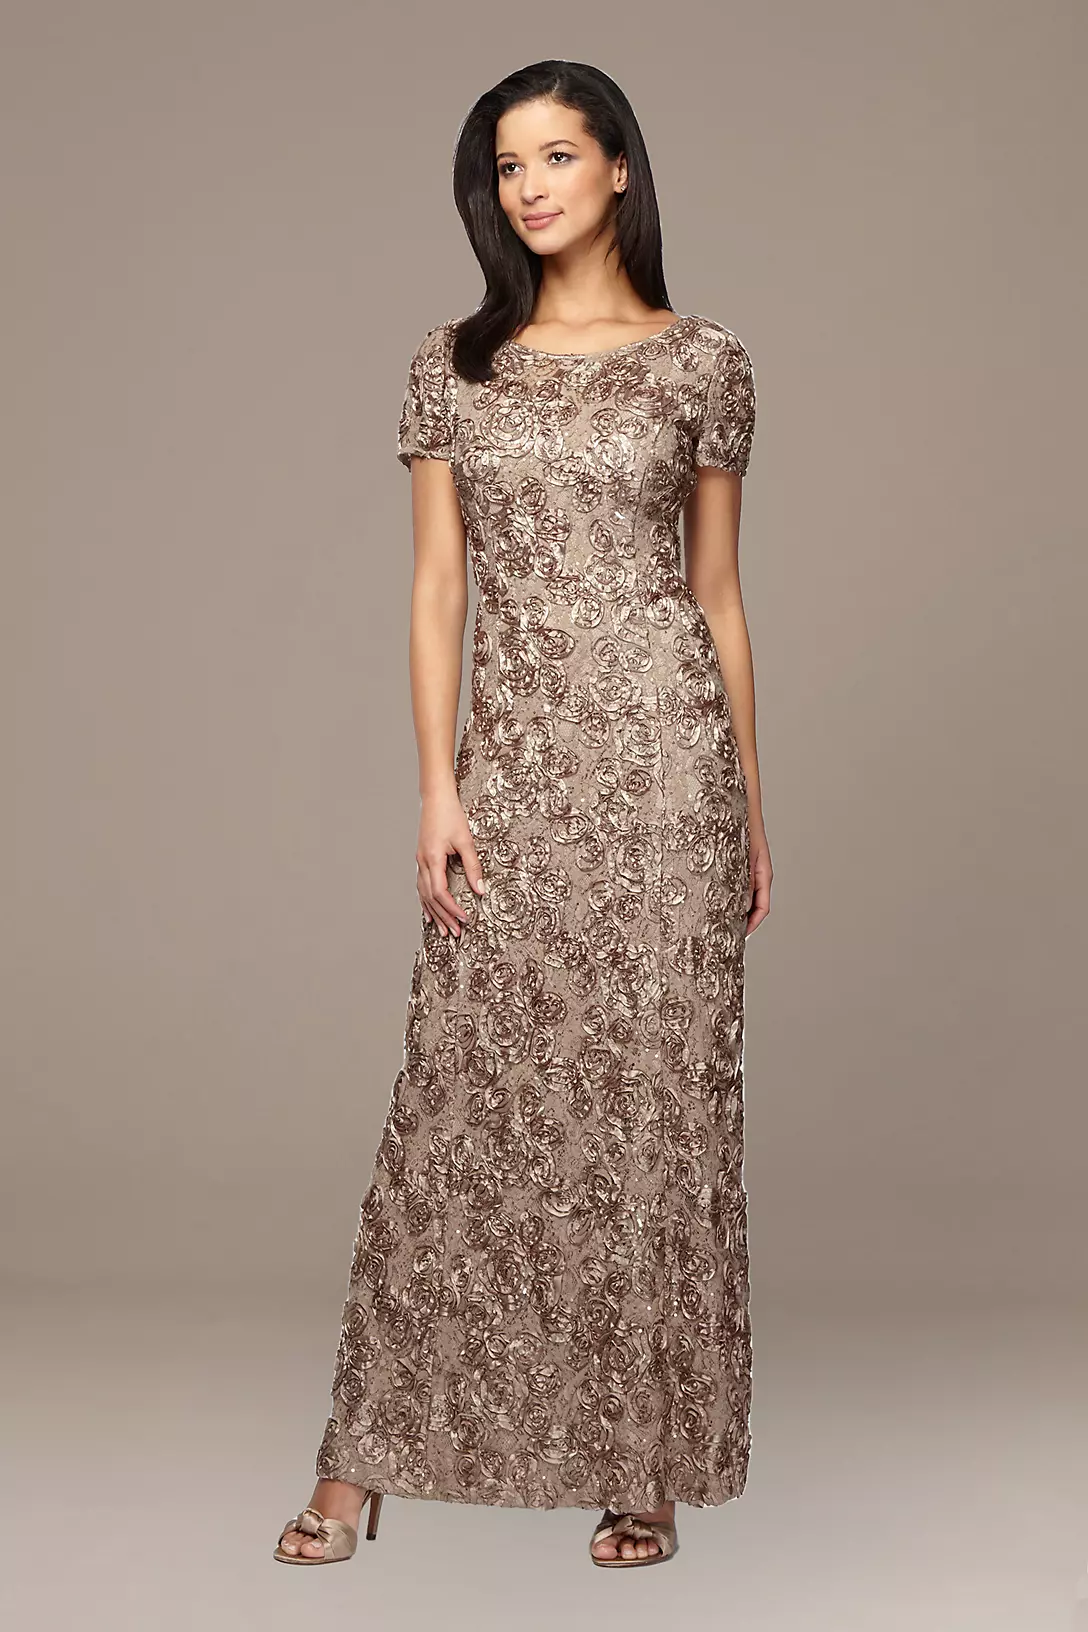 Rosette Lace Cap Sleeve A-Line Gown Image